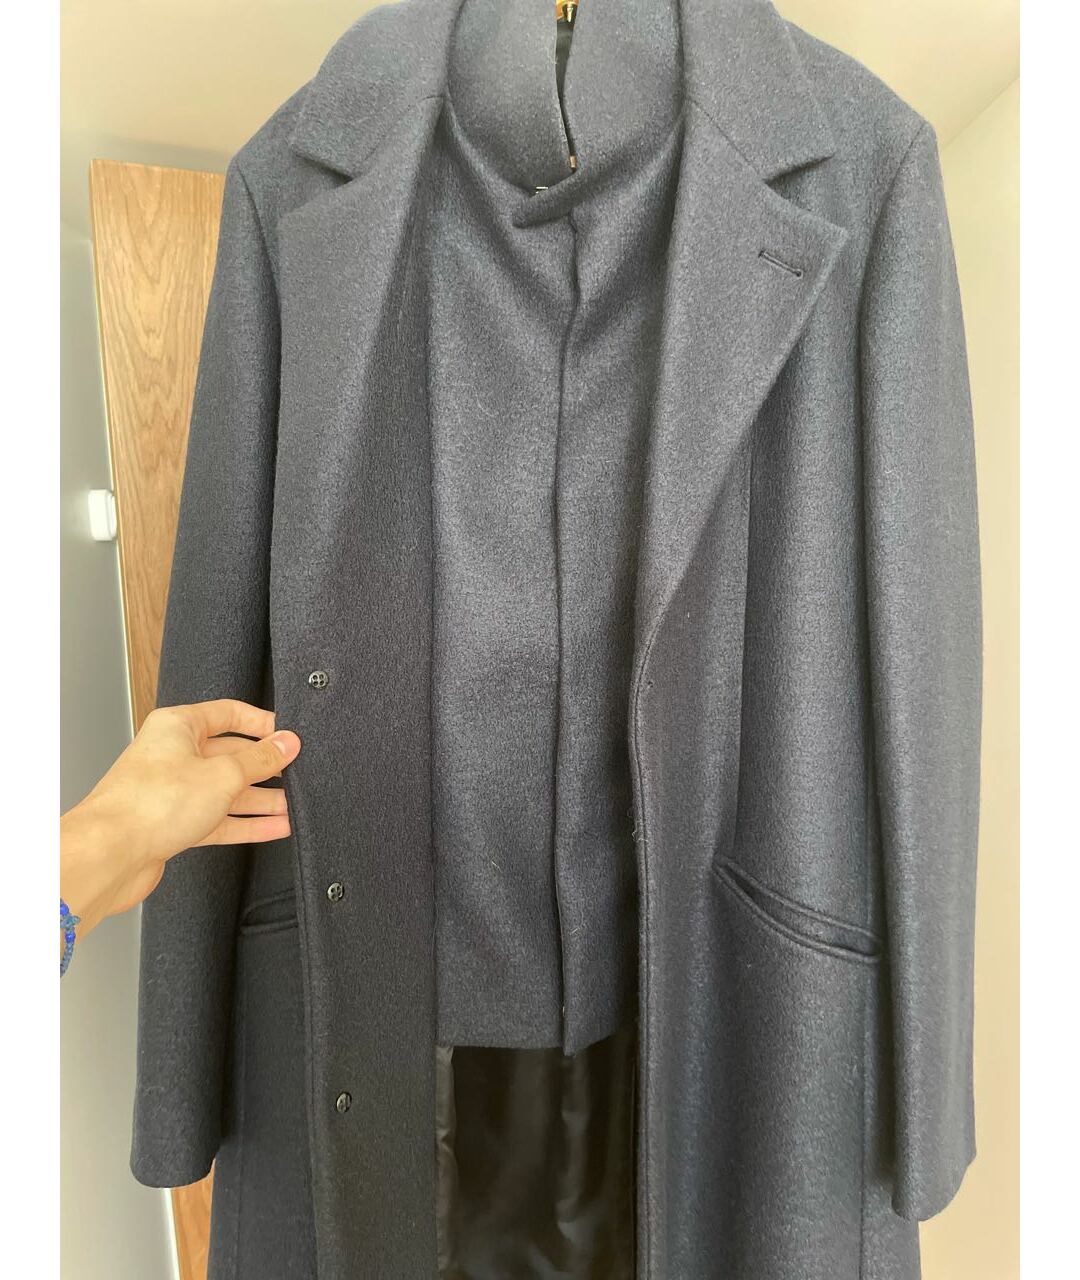 EMPORIO ARMANI Темно-синее шерстяное пальто, фото 3